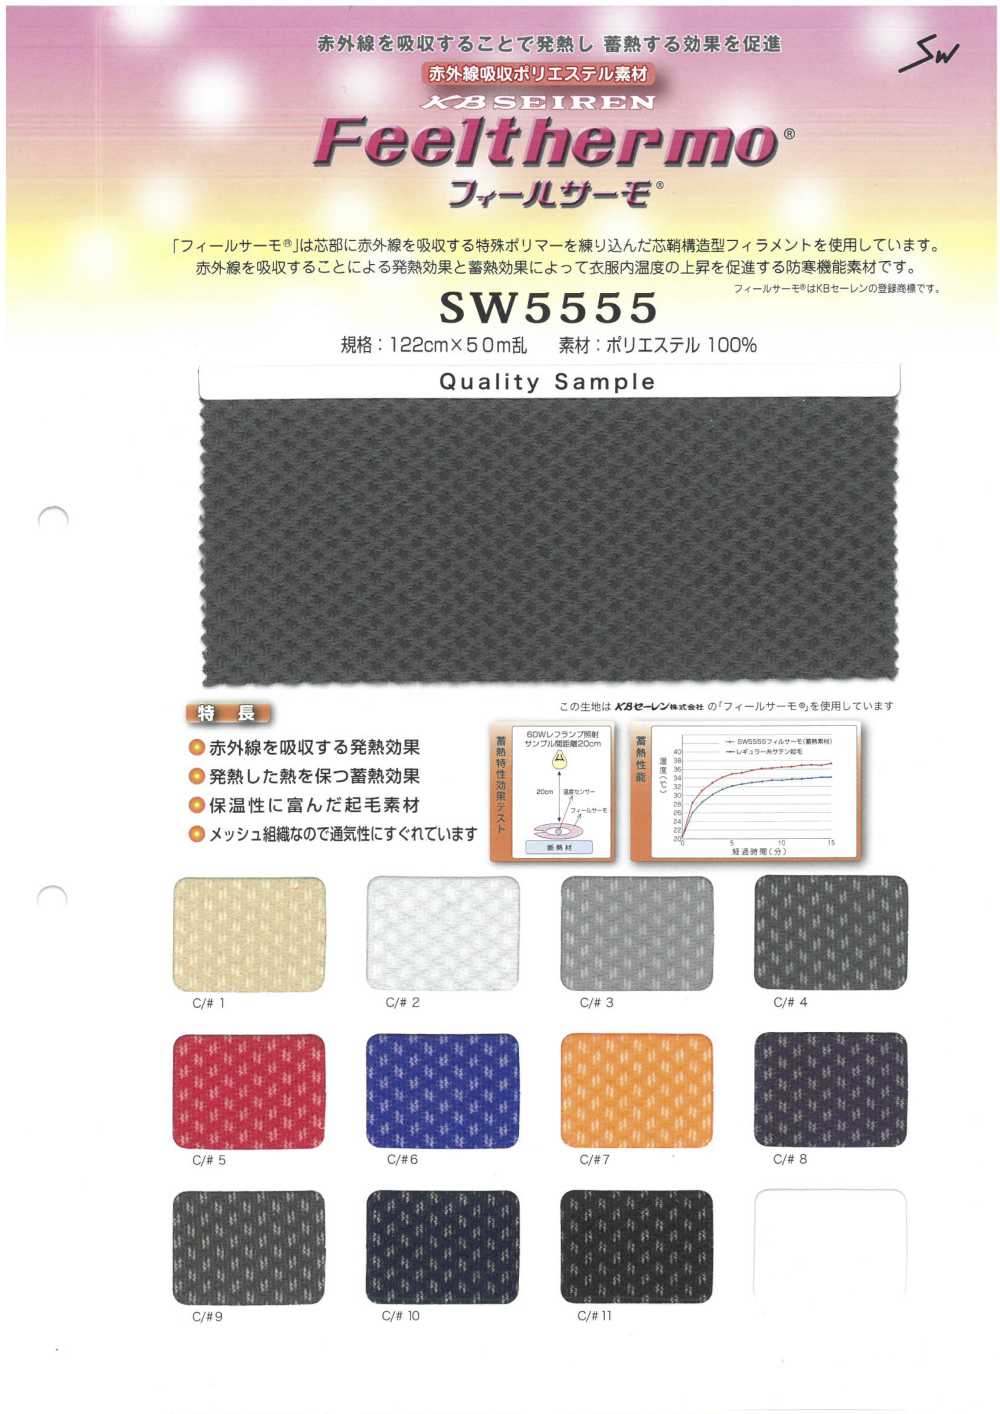 SW5555 Feel Thermo French Fuzzy Mesh[Fabrication De Textile] Fibres Sanwa